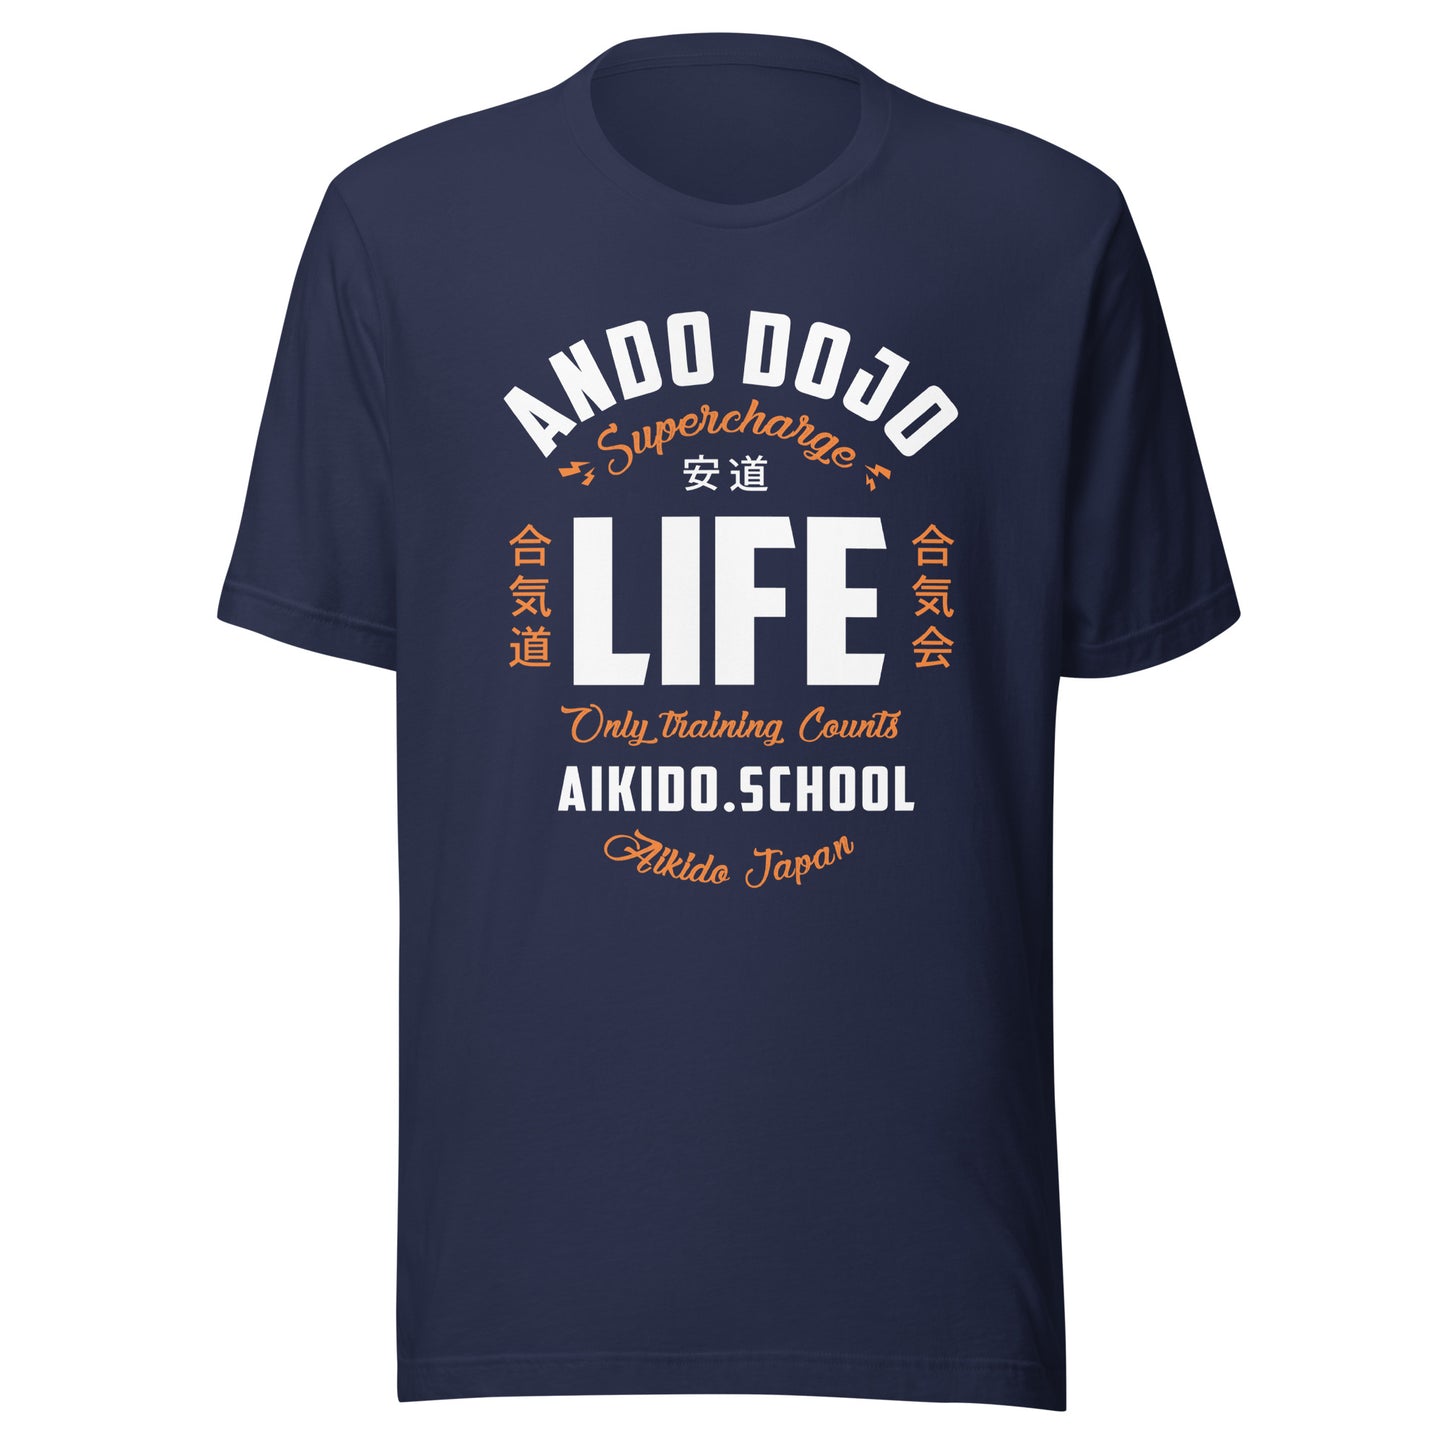 Aikido Life - by Ando